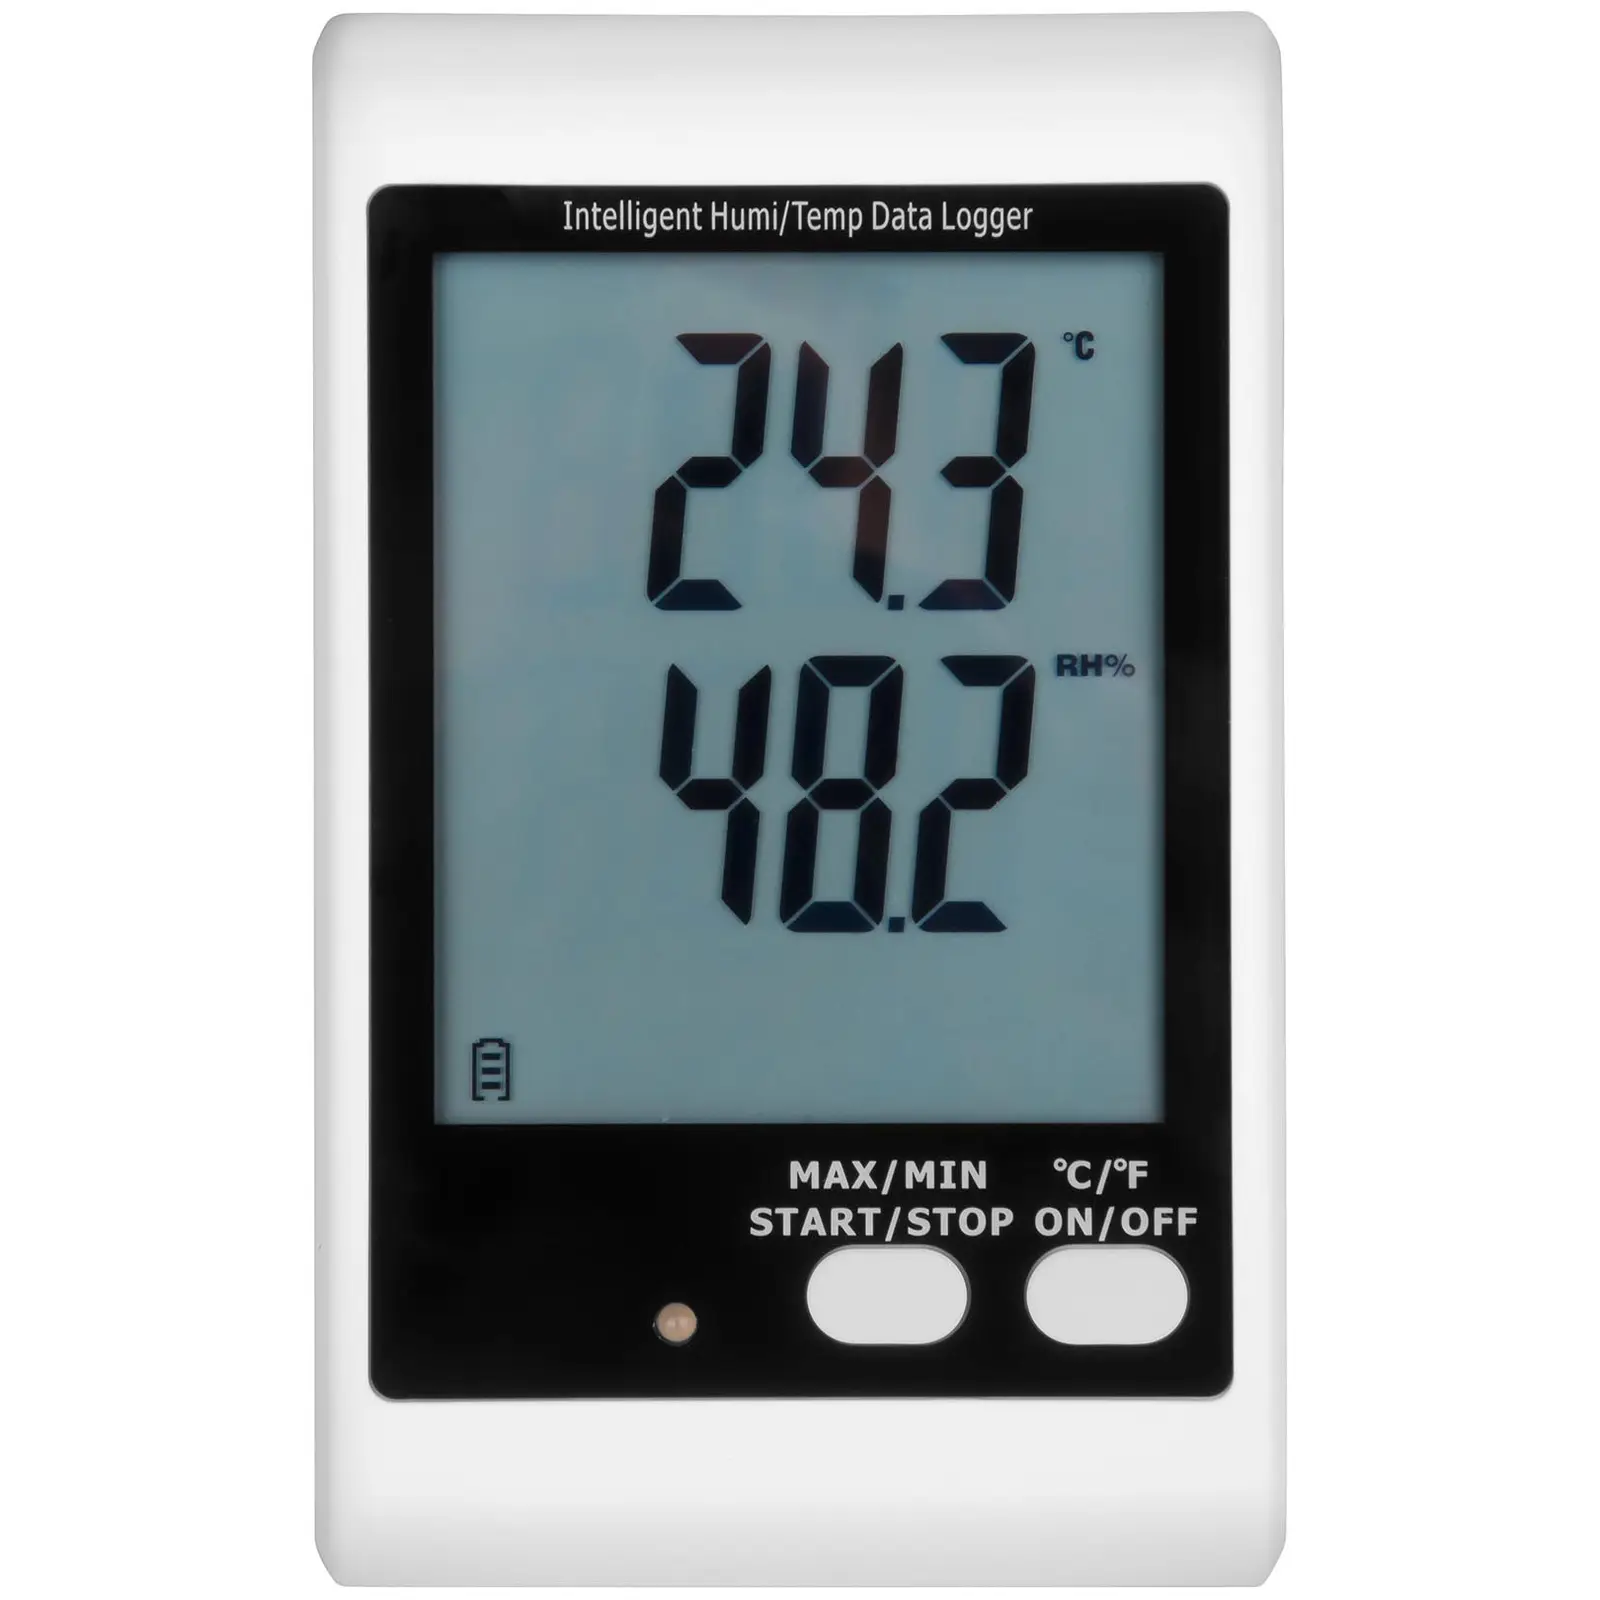 Rejestrator temperatury i wilgotności - LCD